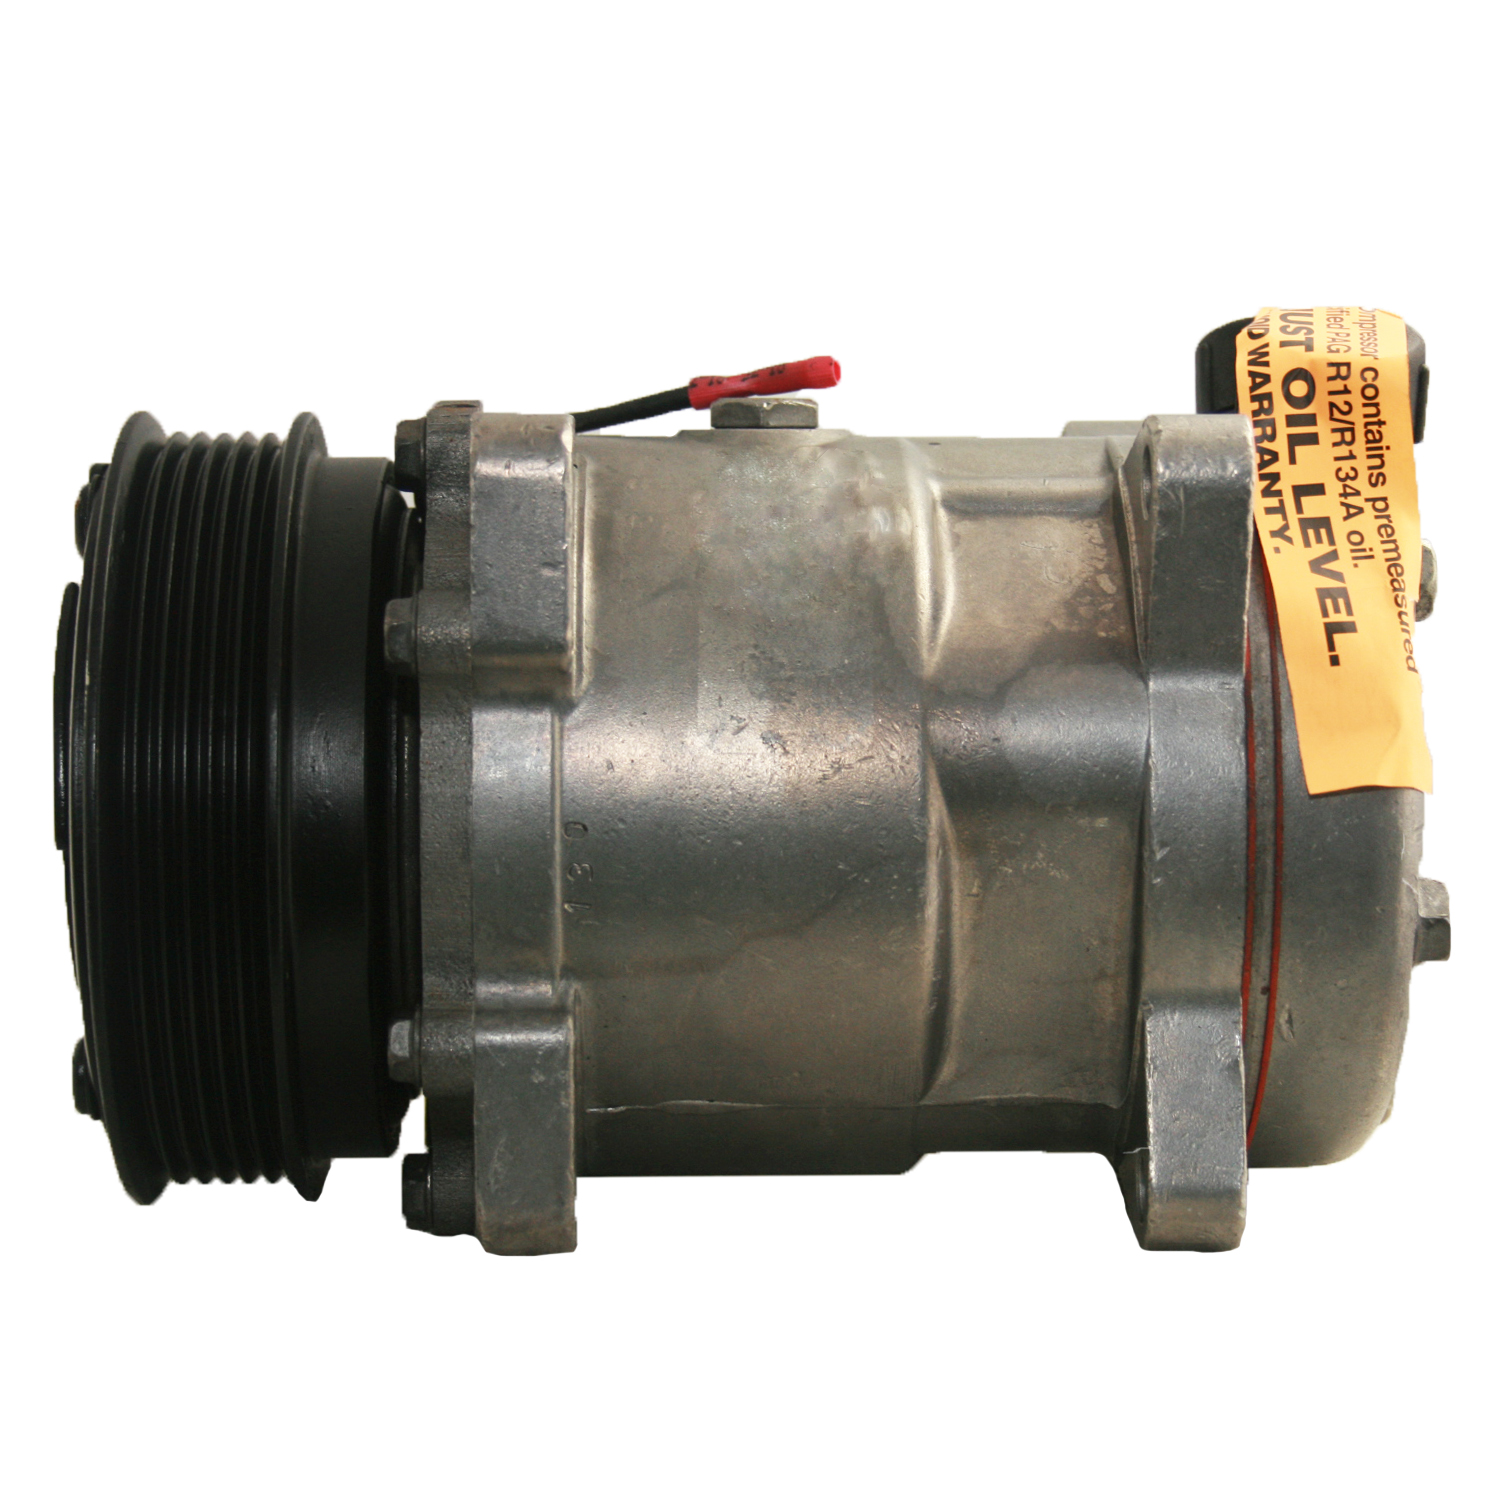 TCW Compressor 40106.601 Remanufactured